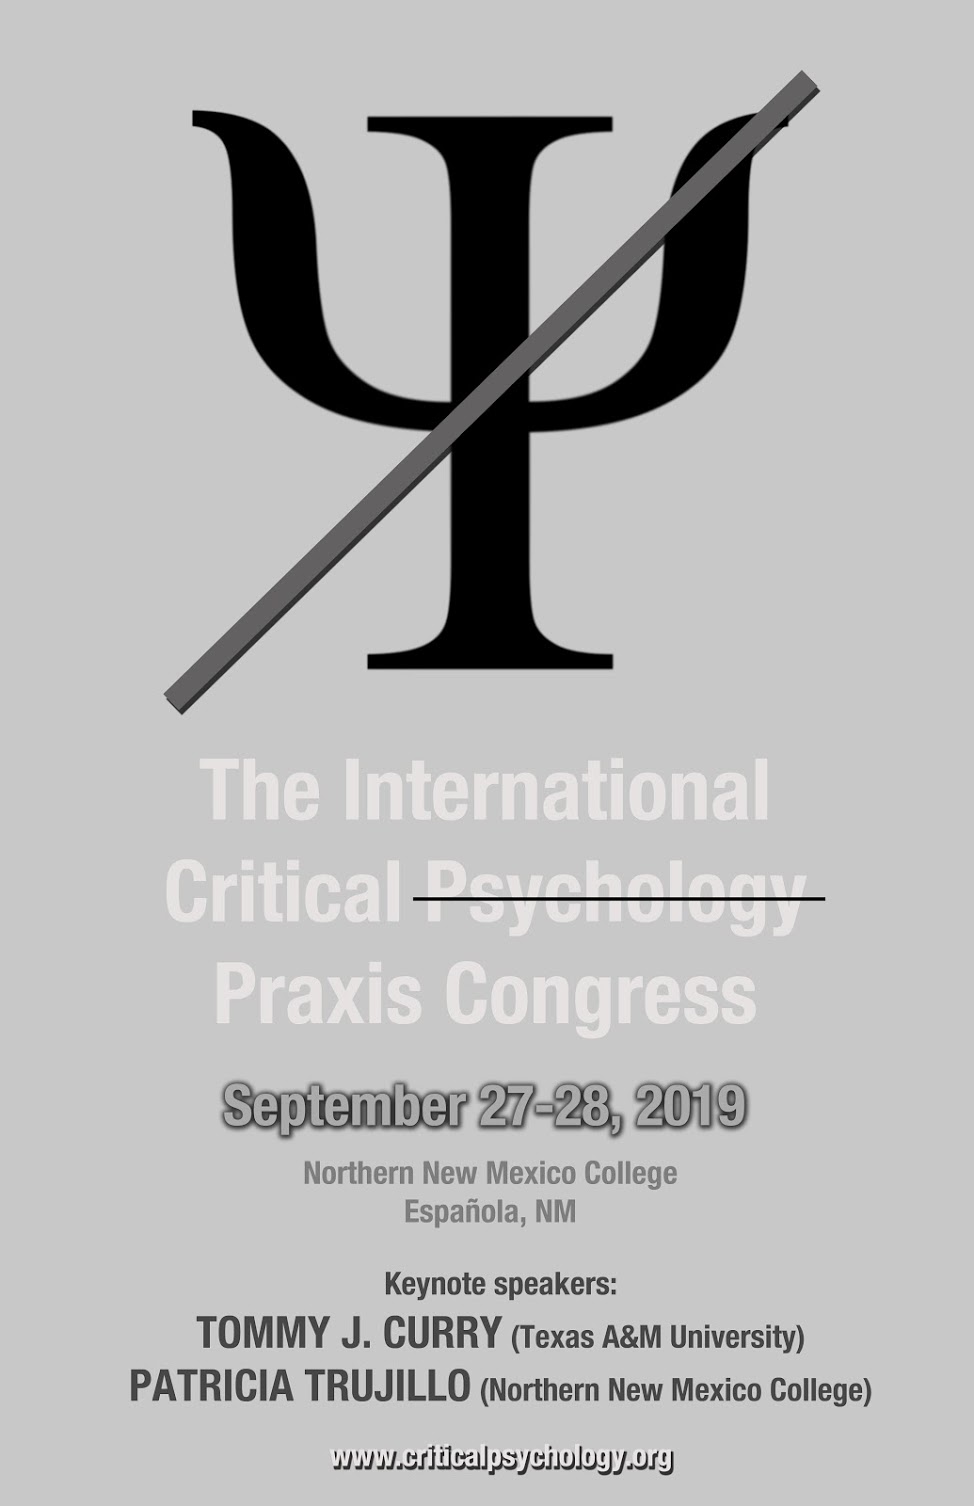 2019 International Critical p̶s̶y̶c̶h̶o̶l̶o̶g̶y̶ Praxis Congress [article image]